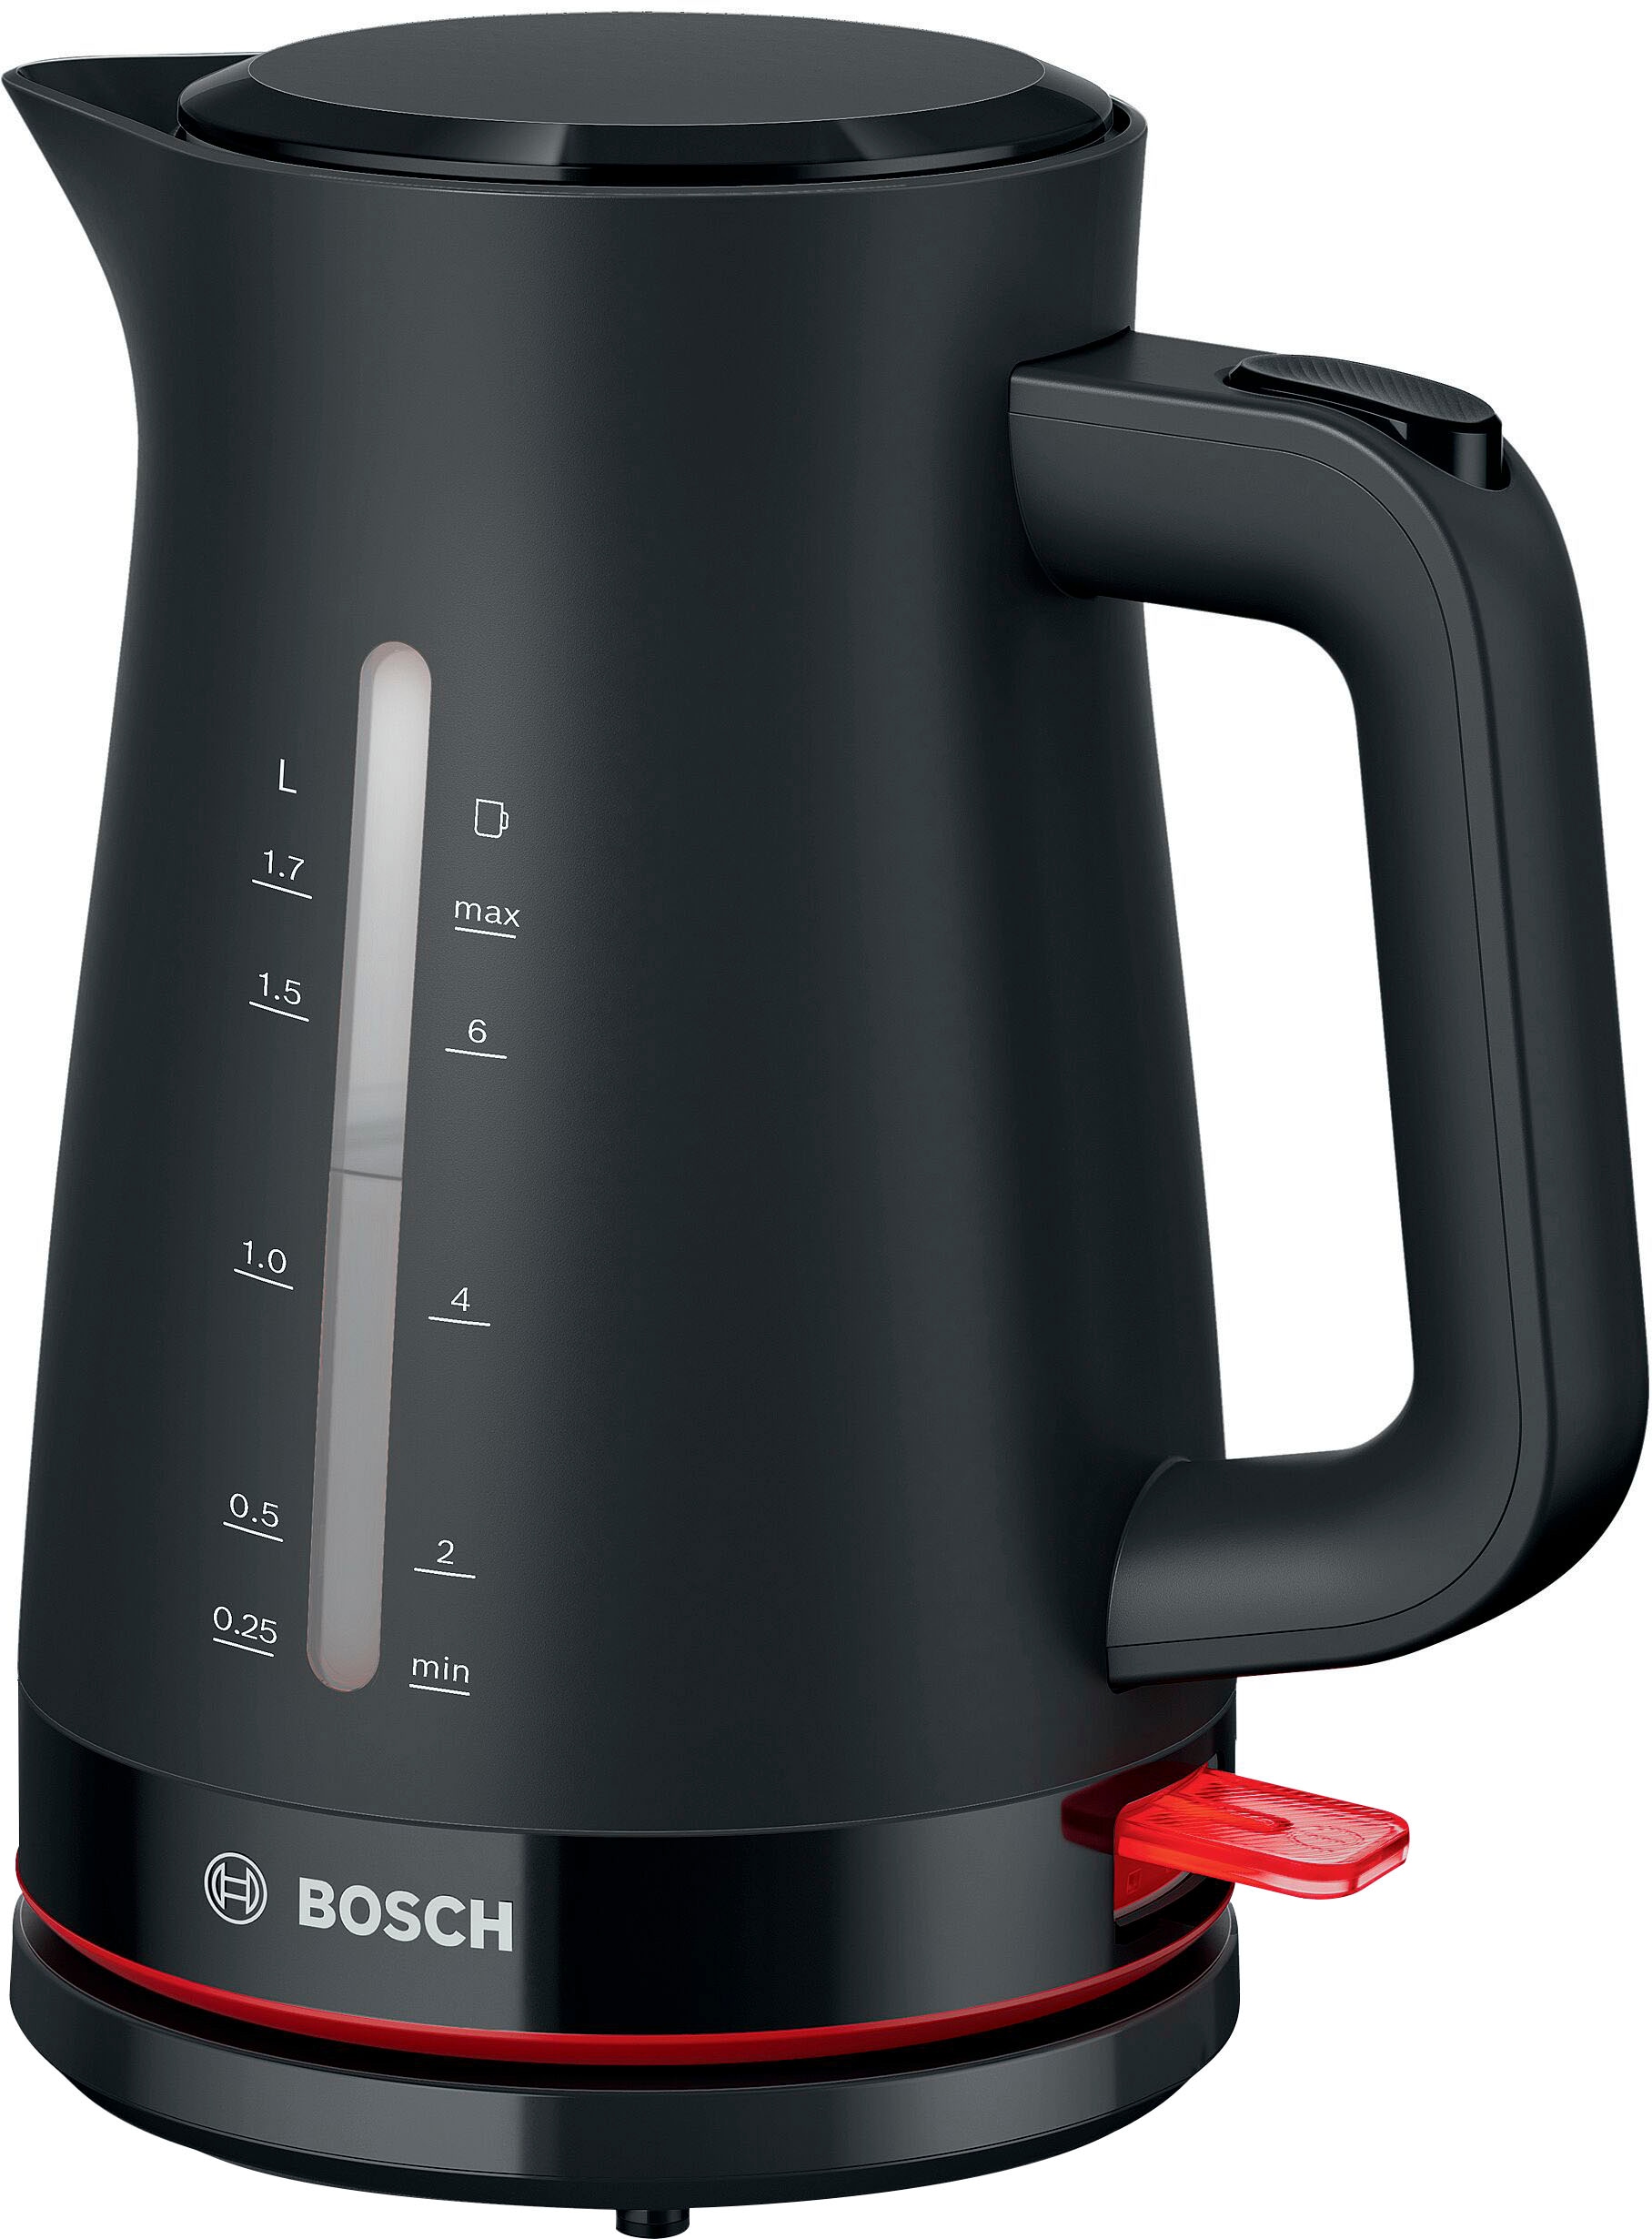 Wasserkocher jetzt Bosch ❤